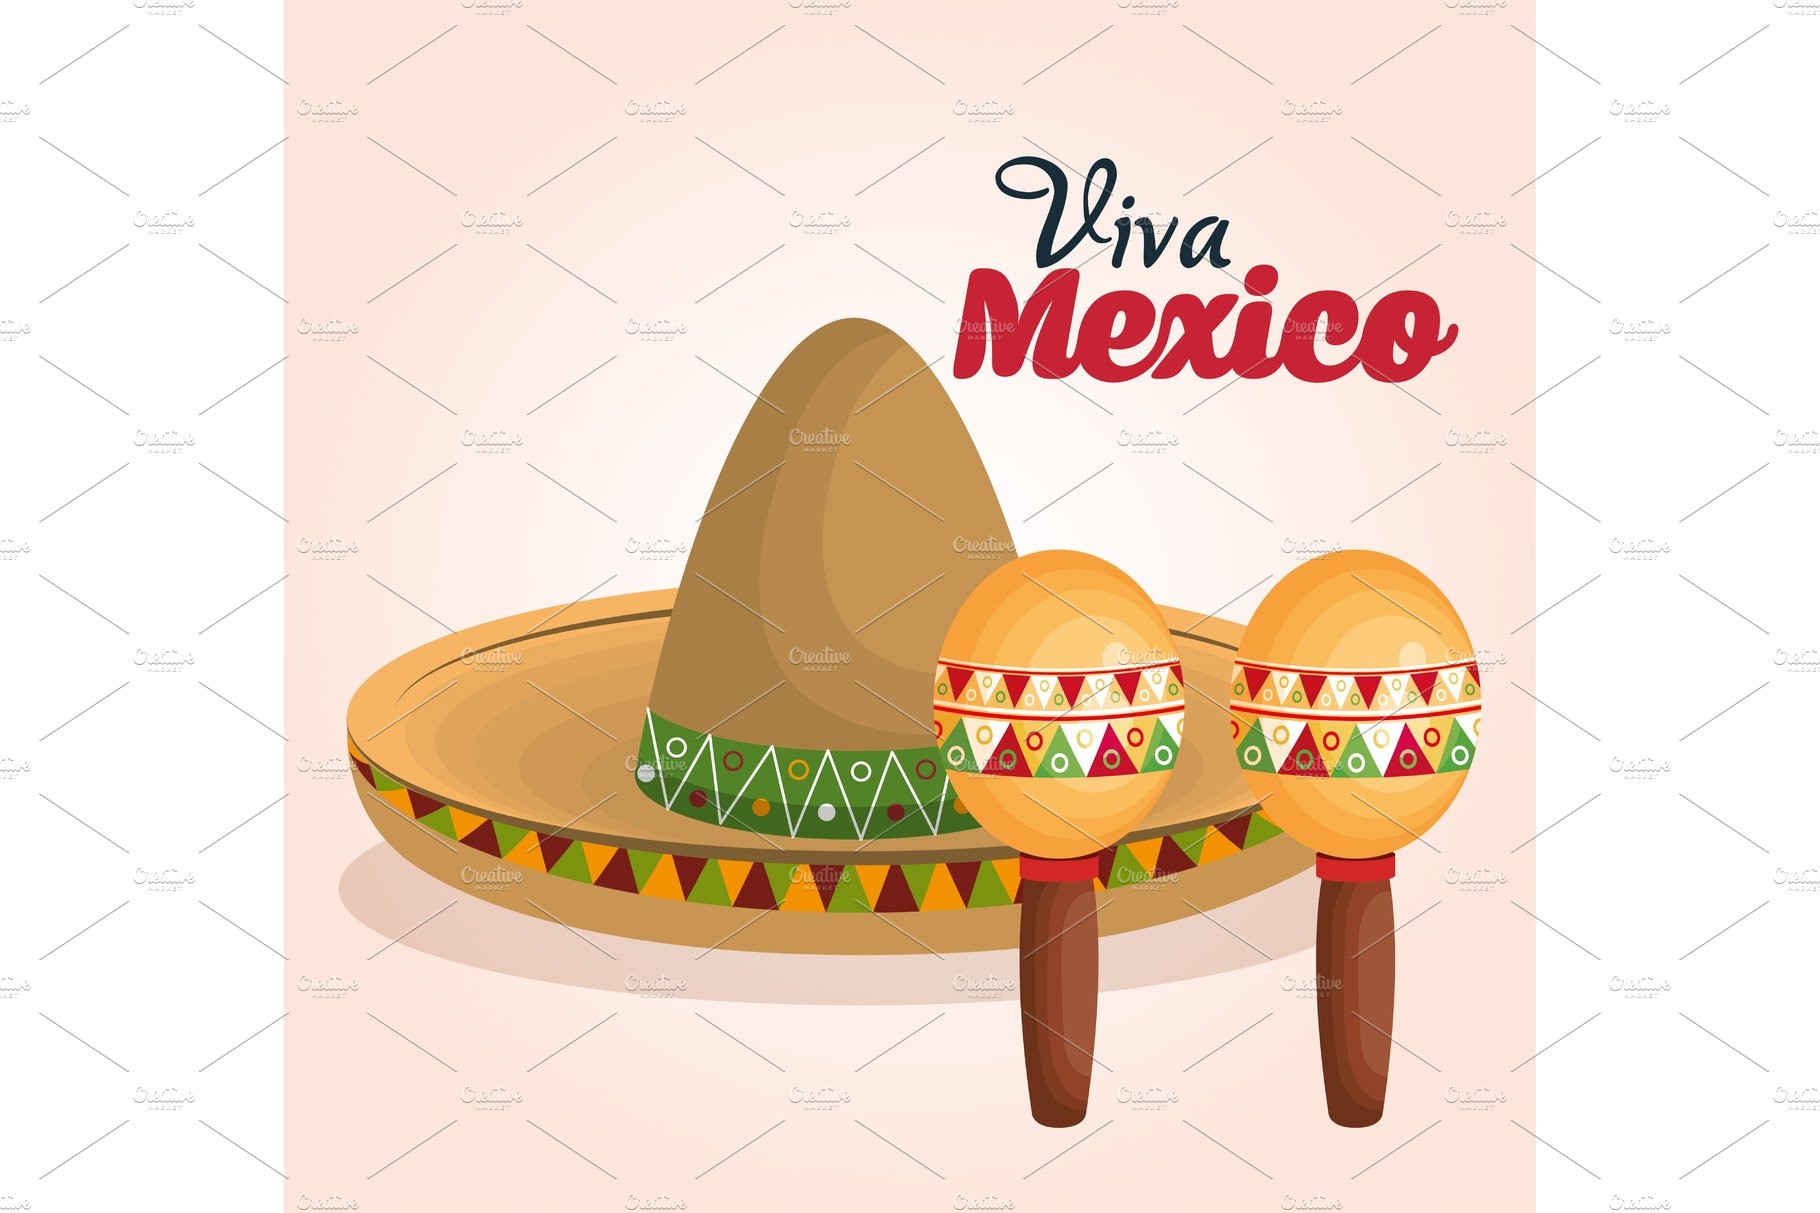 viva mexico poster icon cover image.